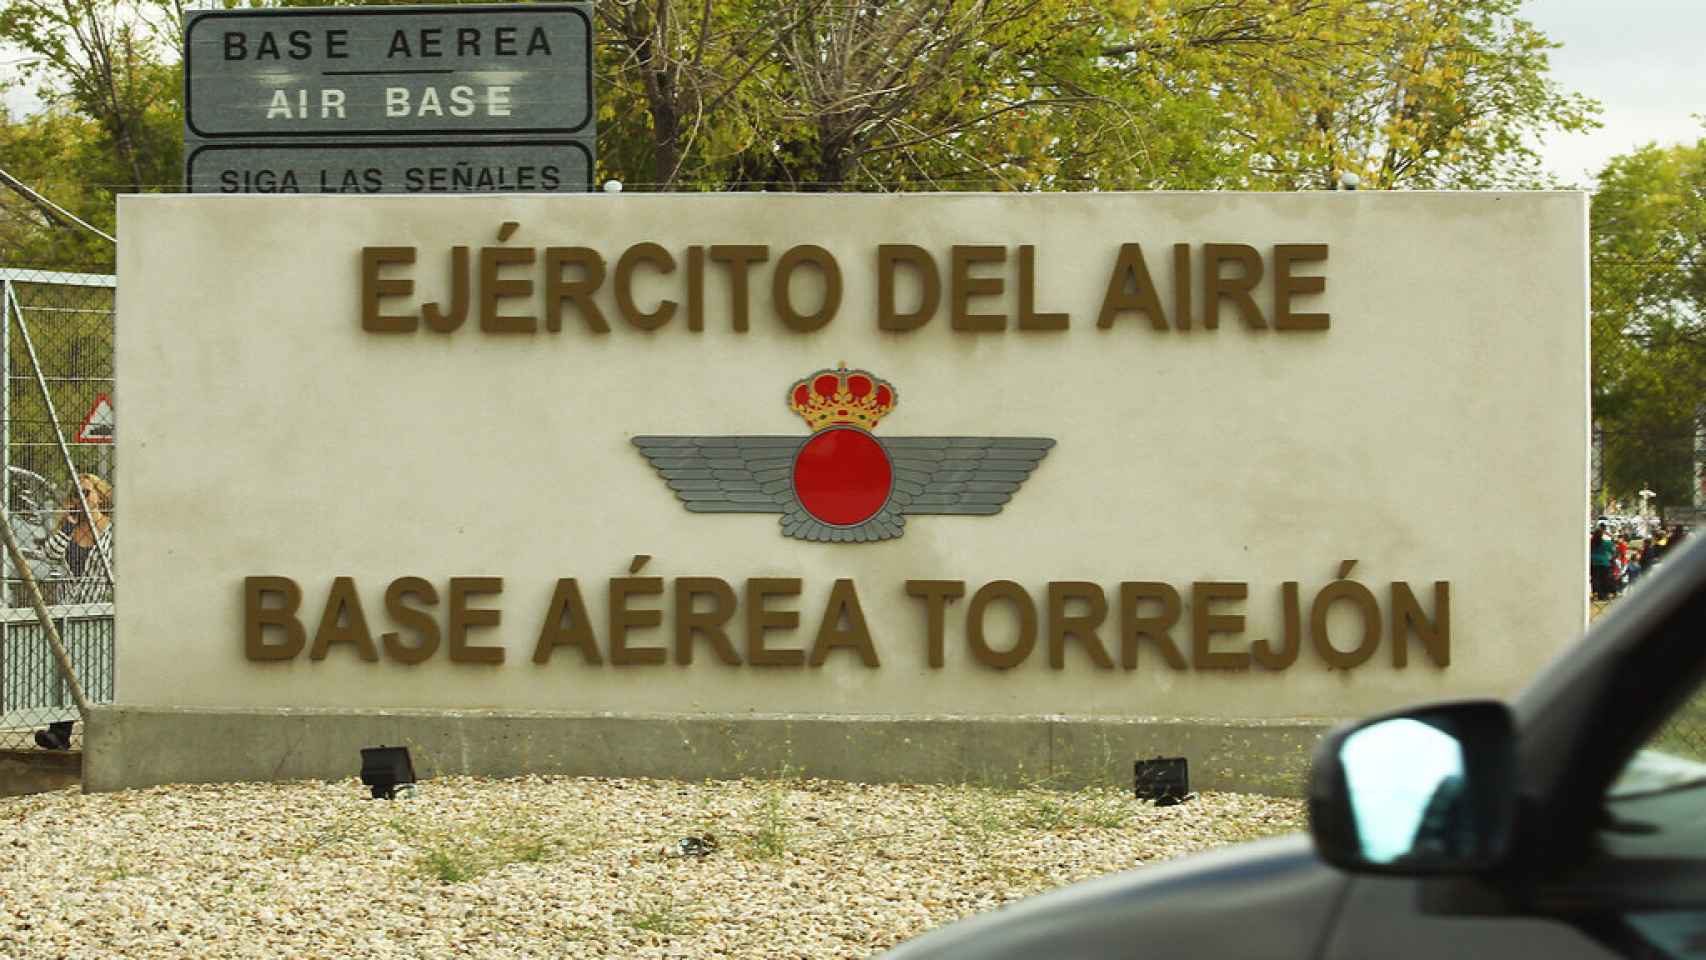 Exterior de la base del Ejército del Aire en Torrejón de Ardoz.